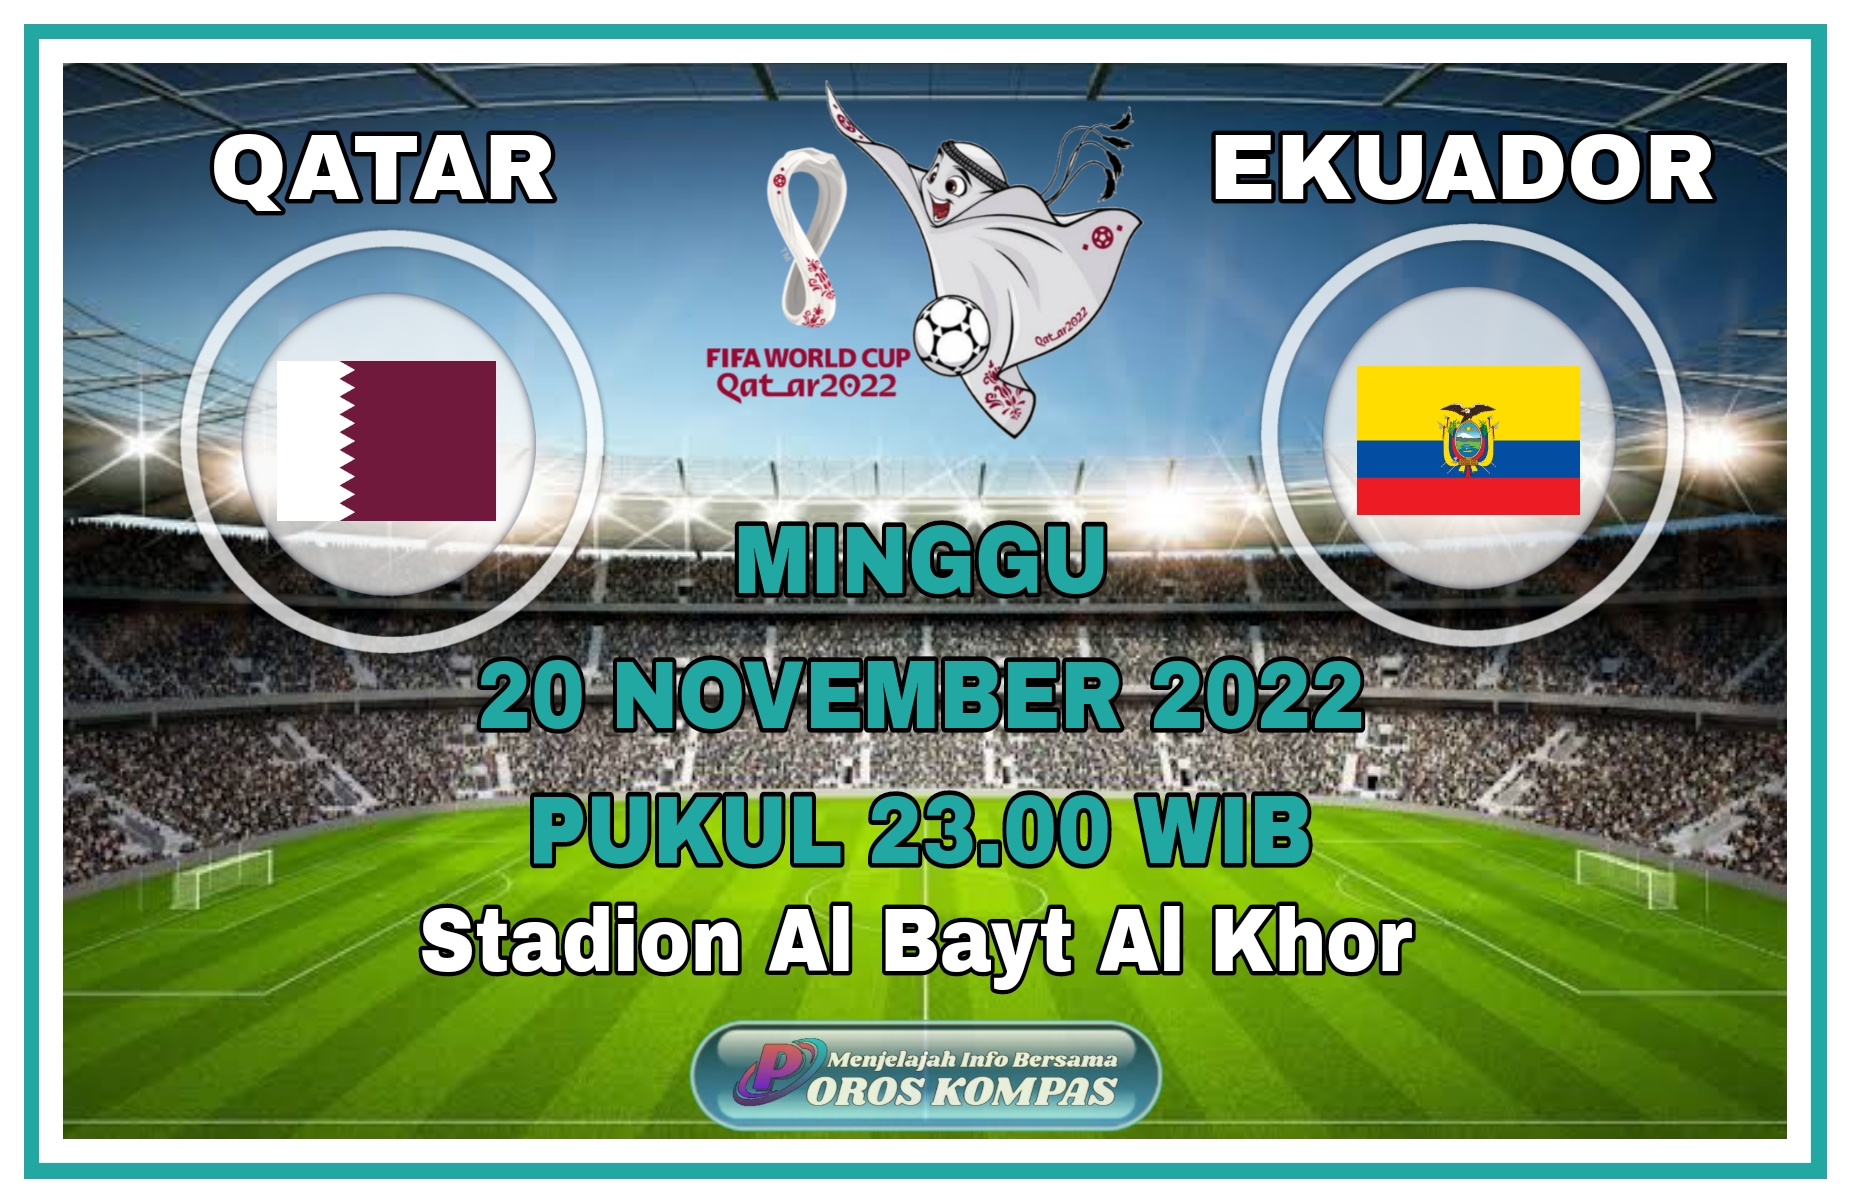 Prediksi Qatar vs Ekuador di Piala Dunia 2022